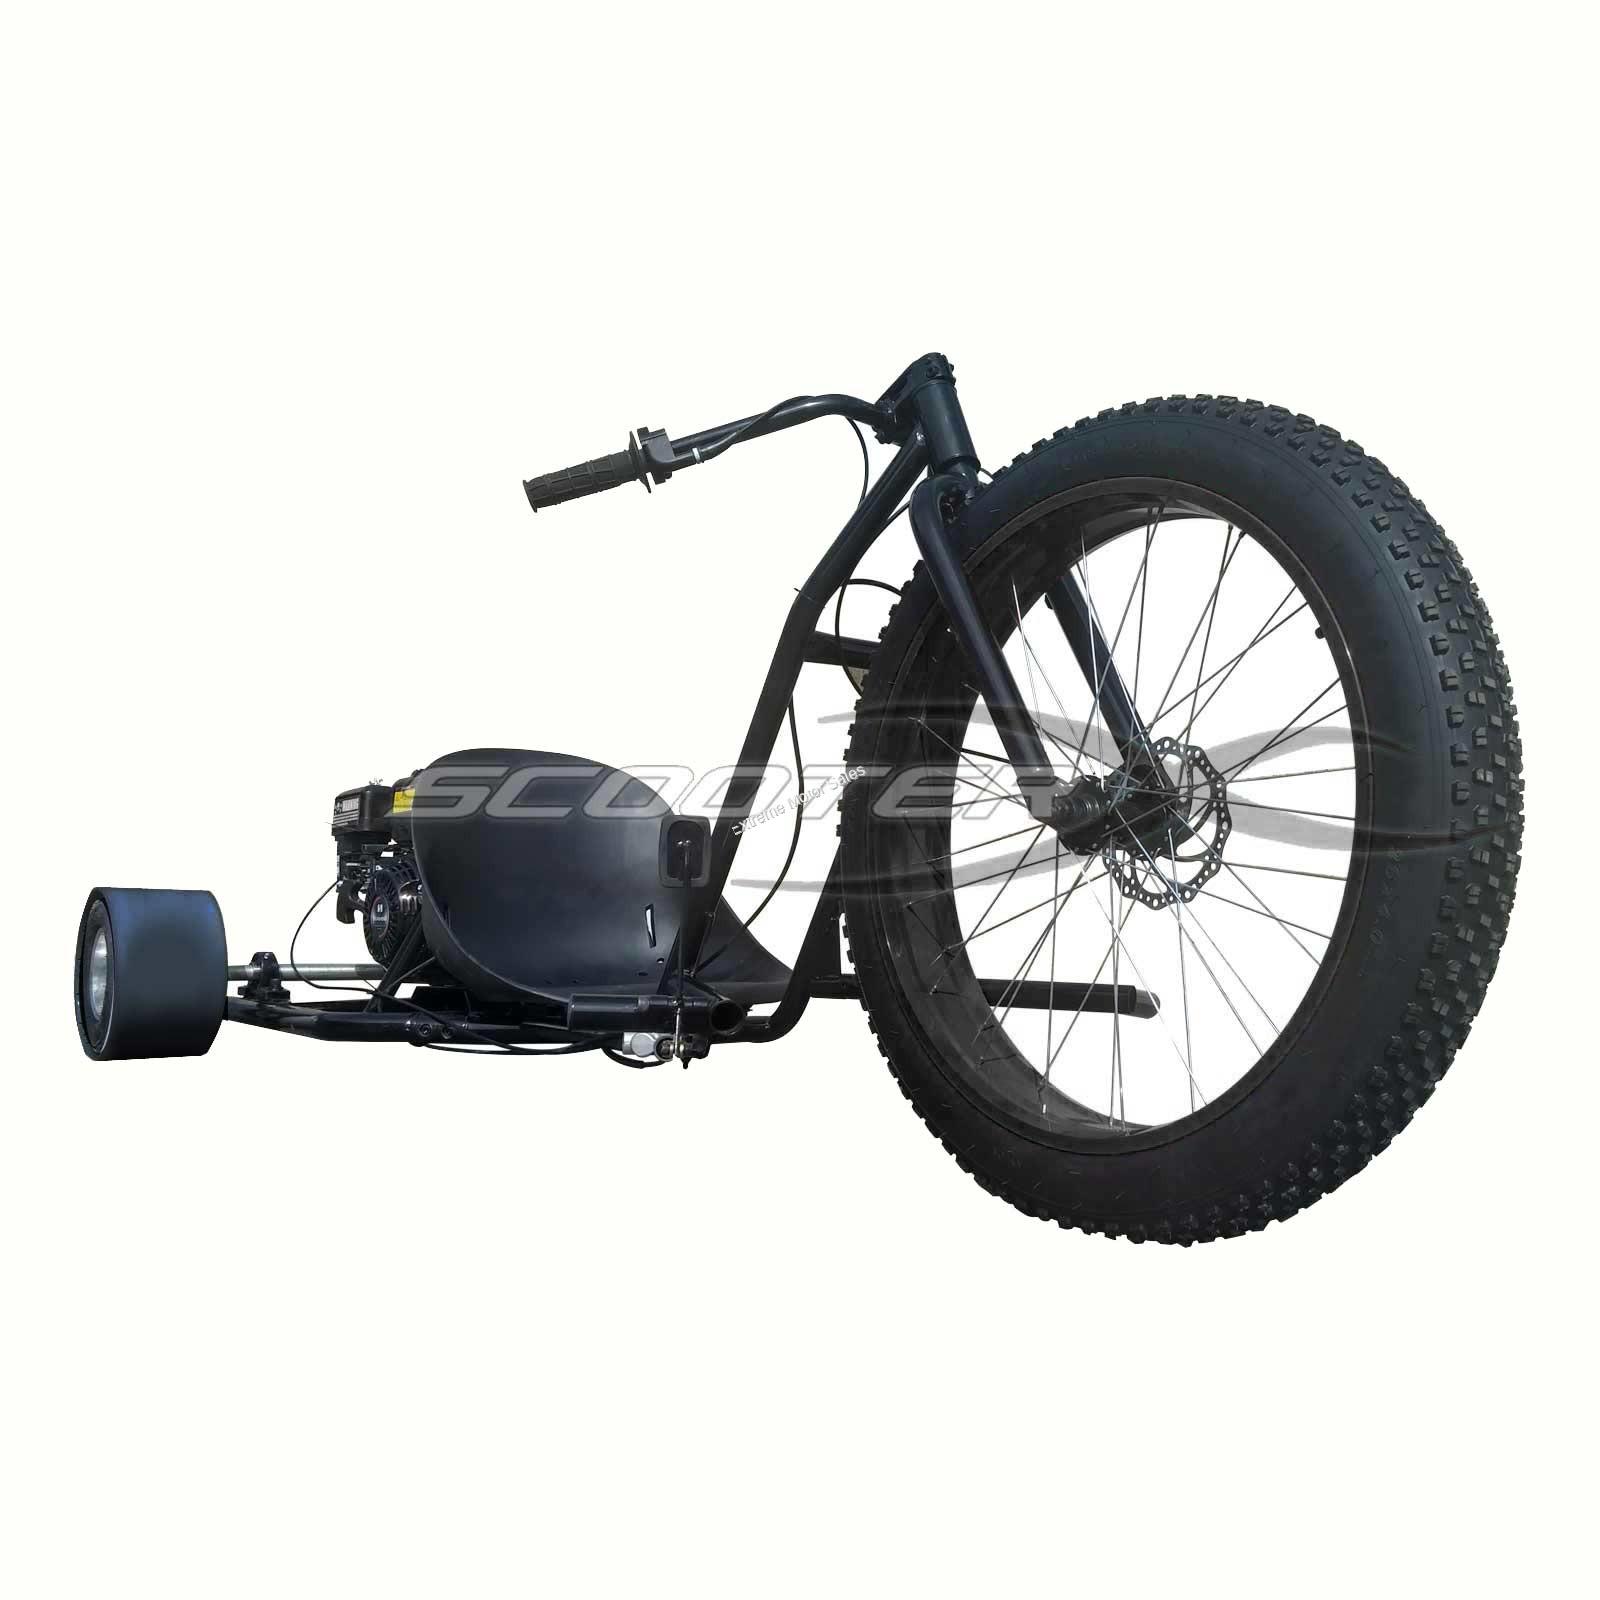 3 wheel bike with gas motor